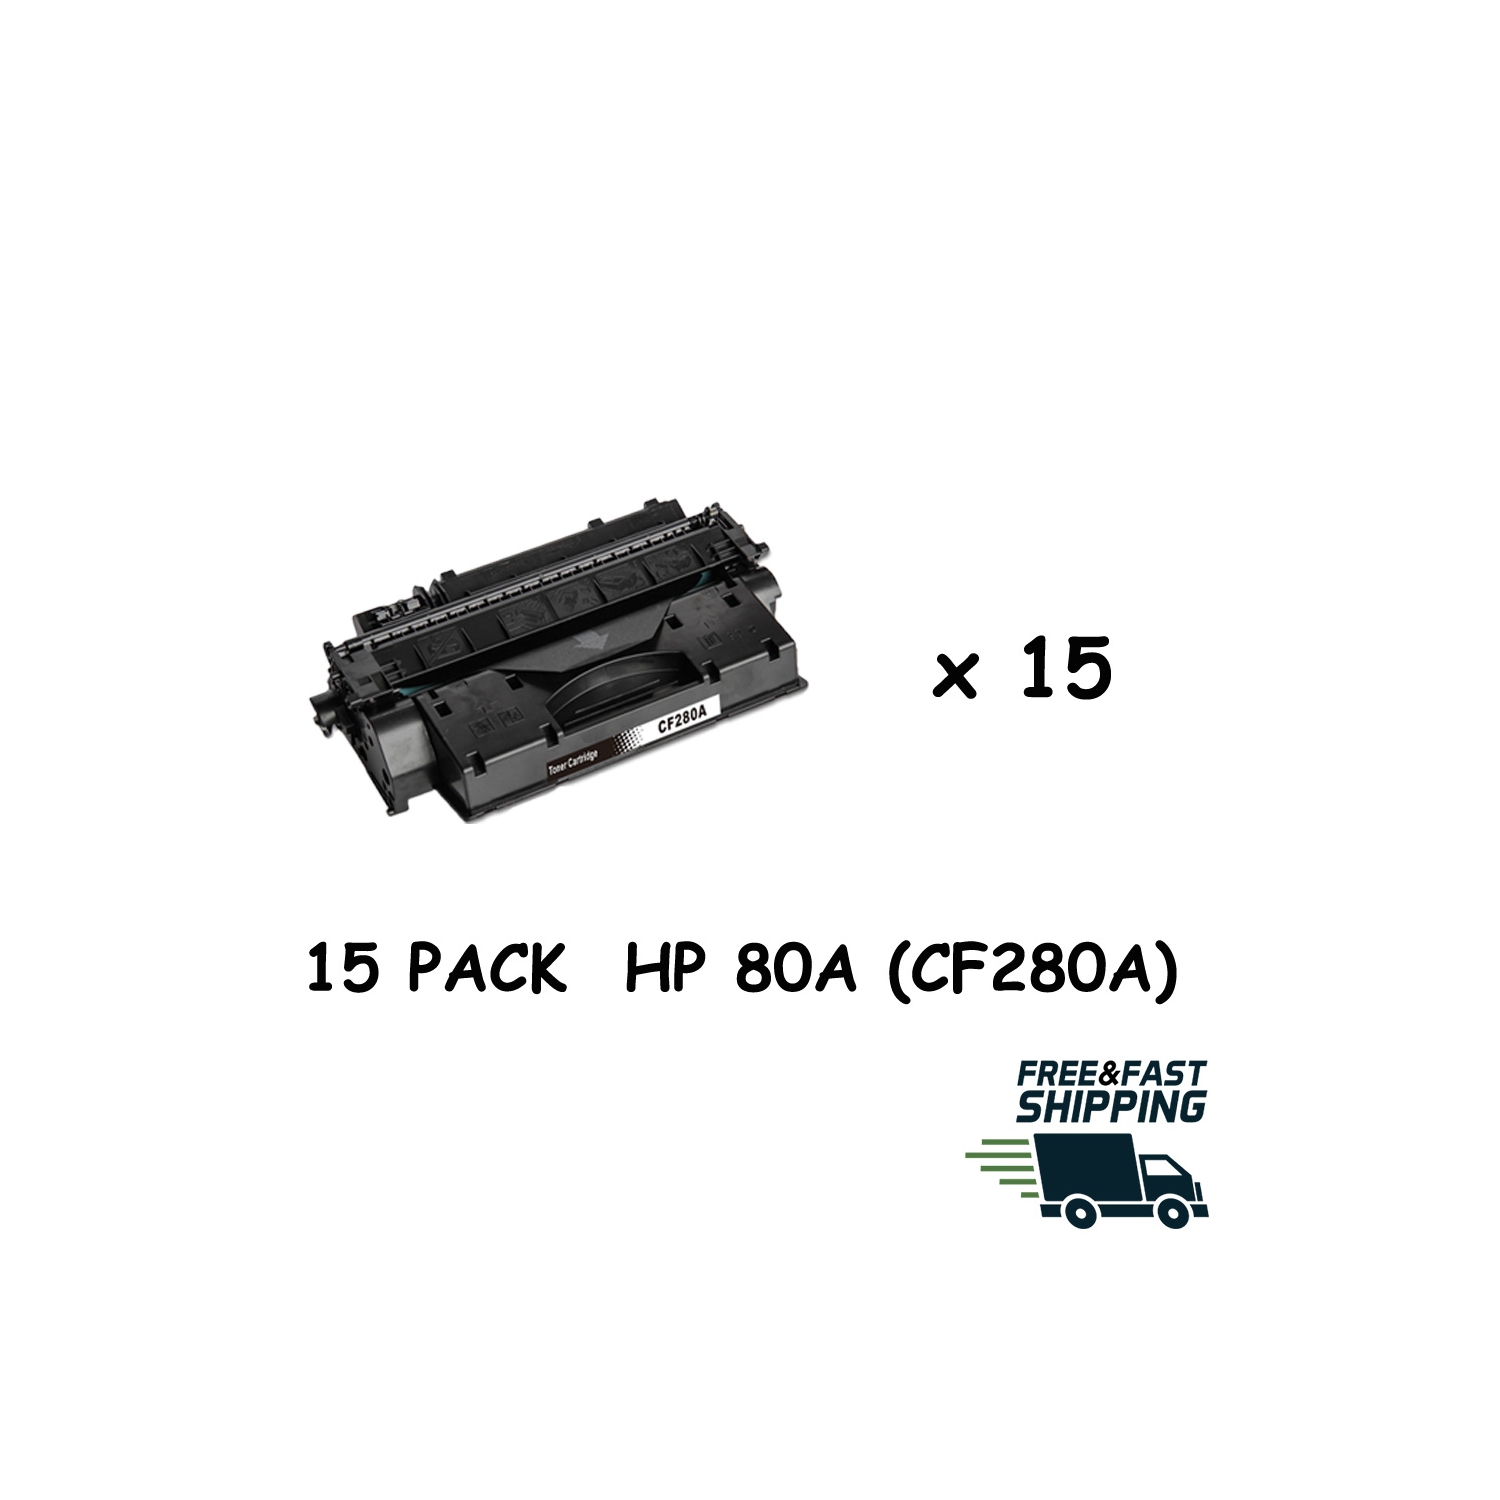 Bestoner™ 15 PK HP 80A (CF280A)/hp80a/80a/HP80A/80A/CF280A/cf280a/cf280/280/80A/80 HP LaserJet Pro M401 M425d